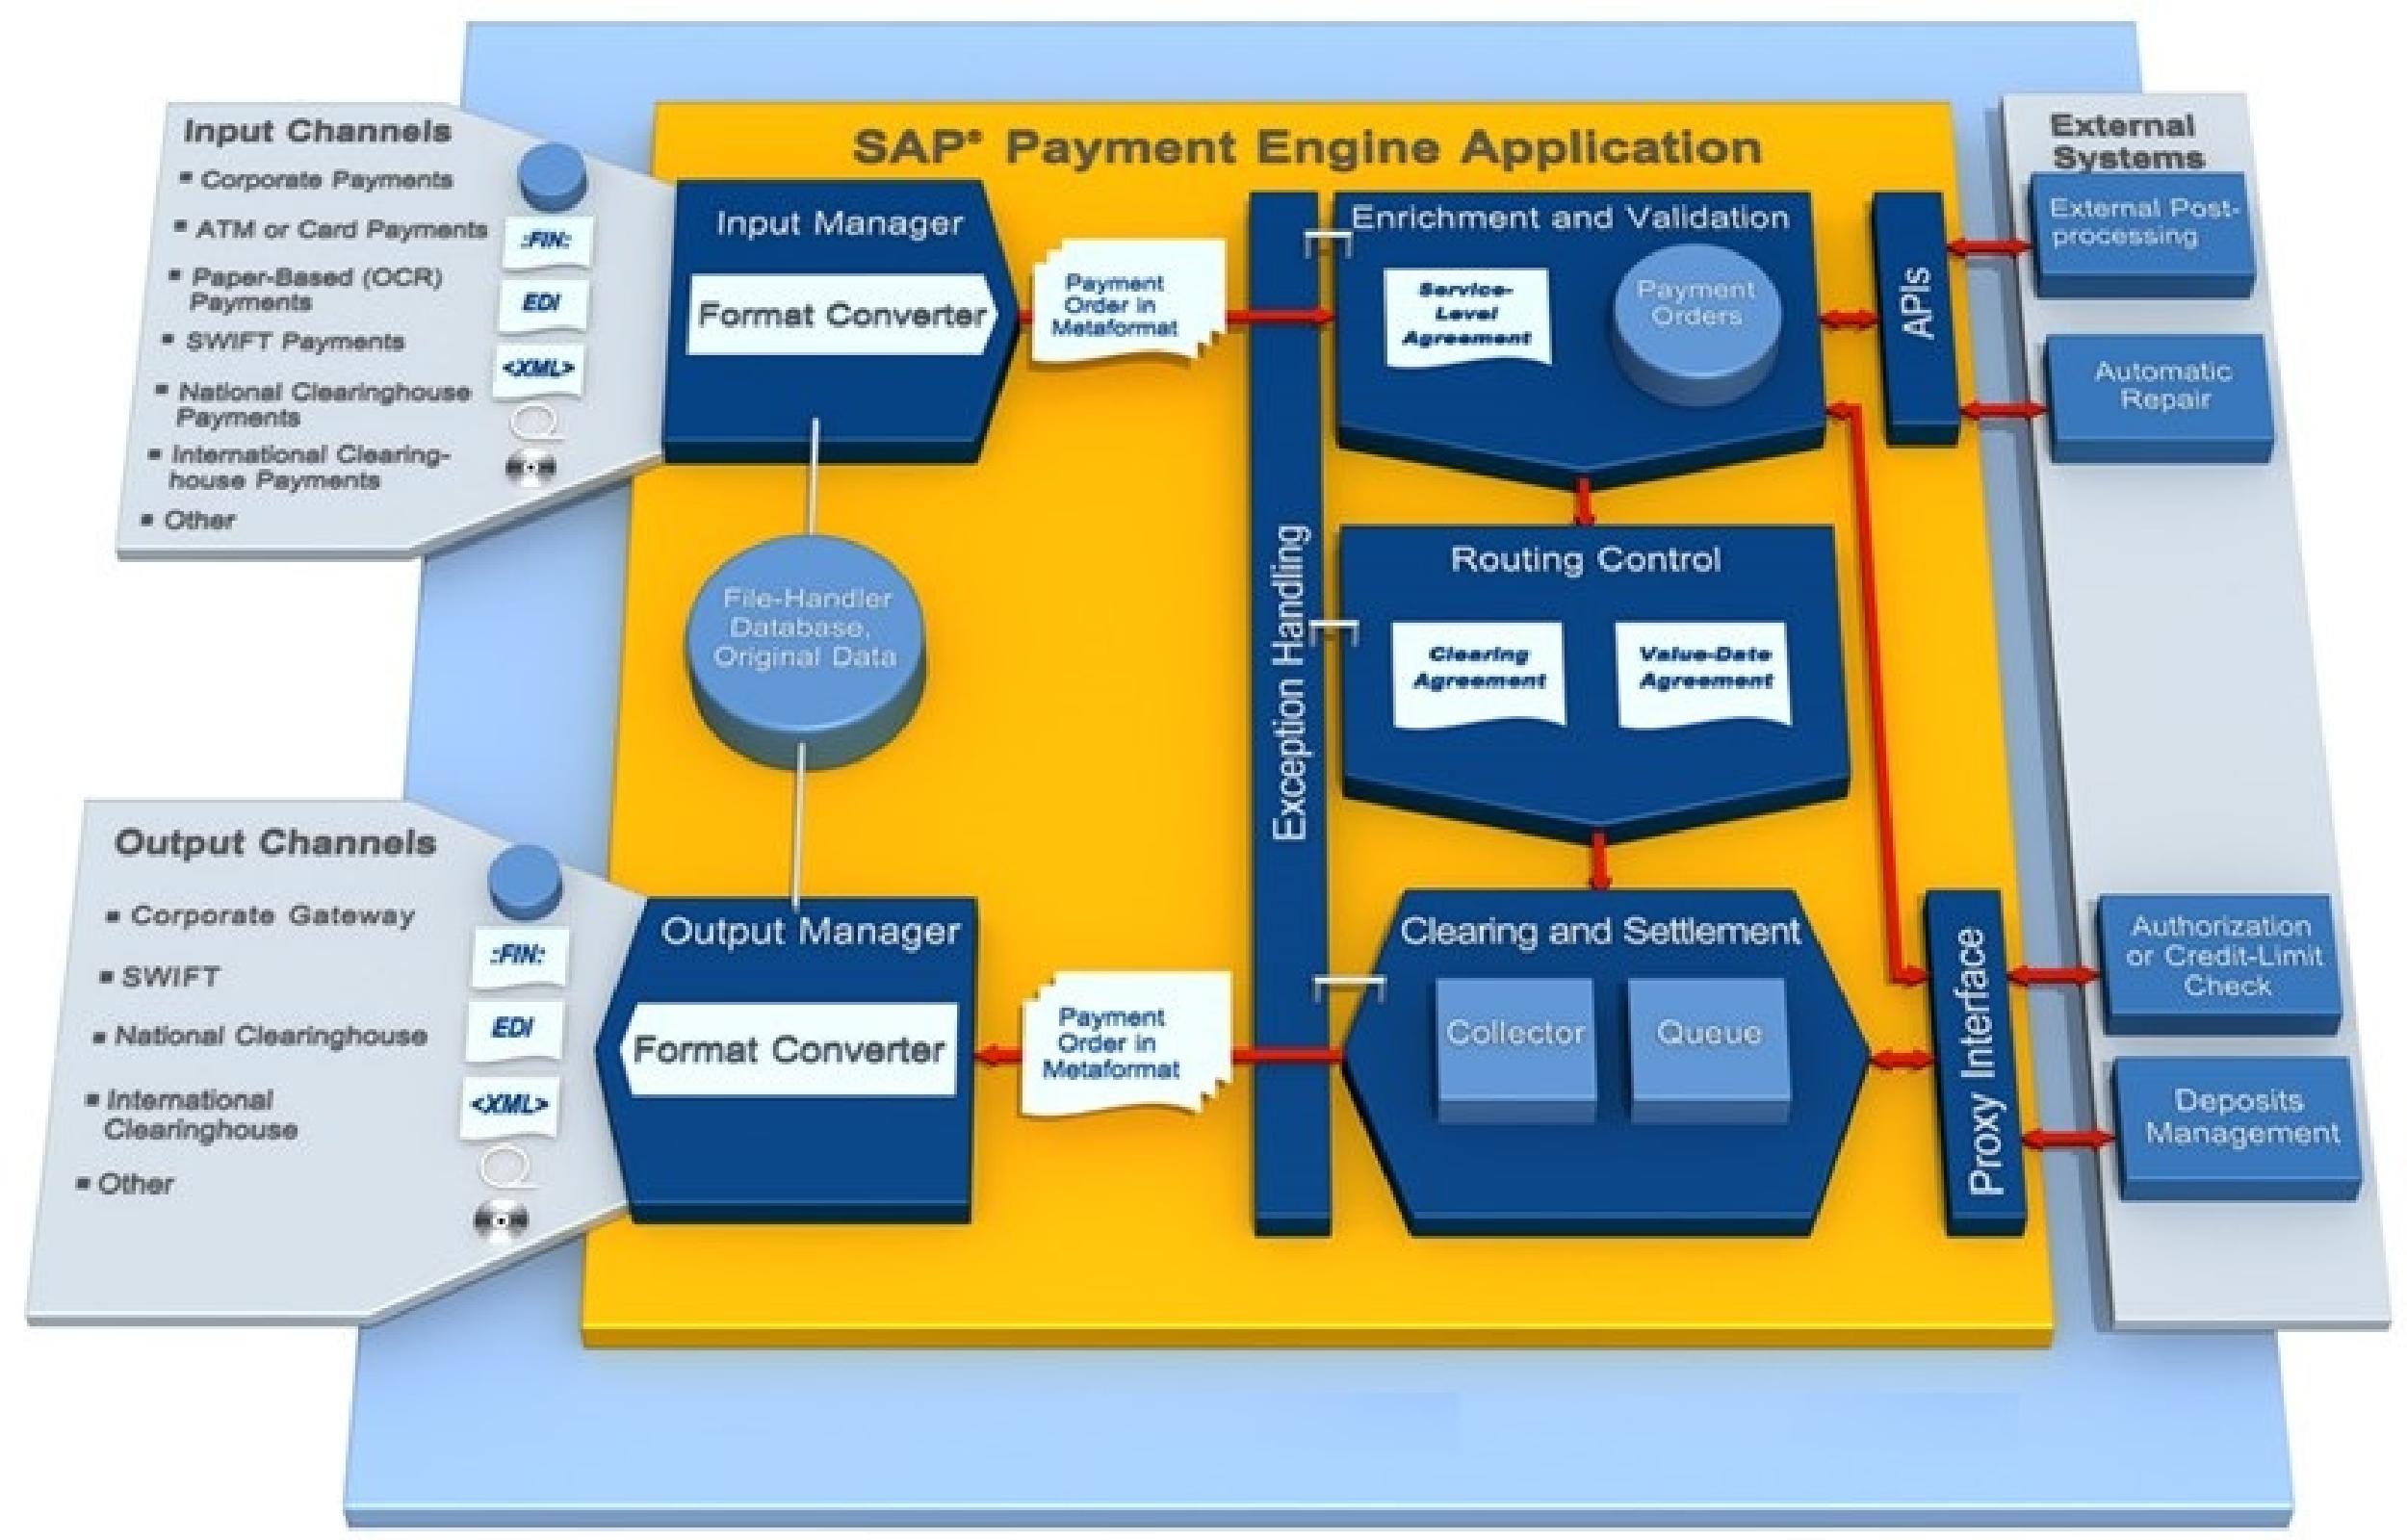 SAP Payment Engine